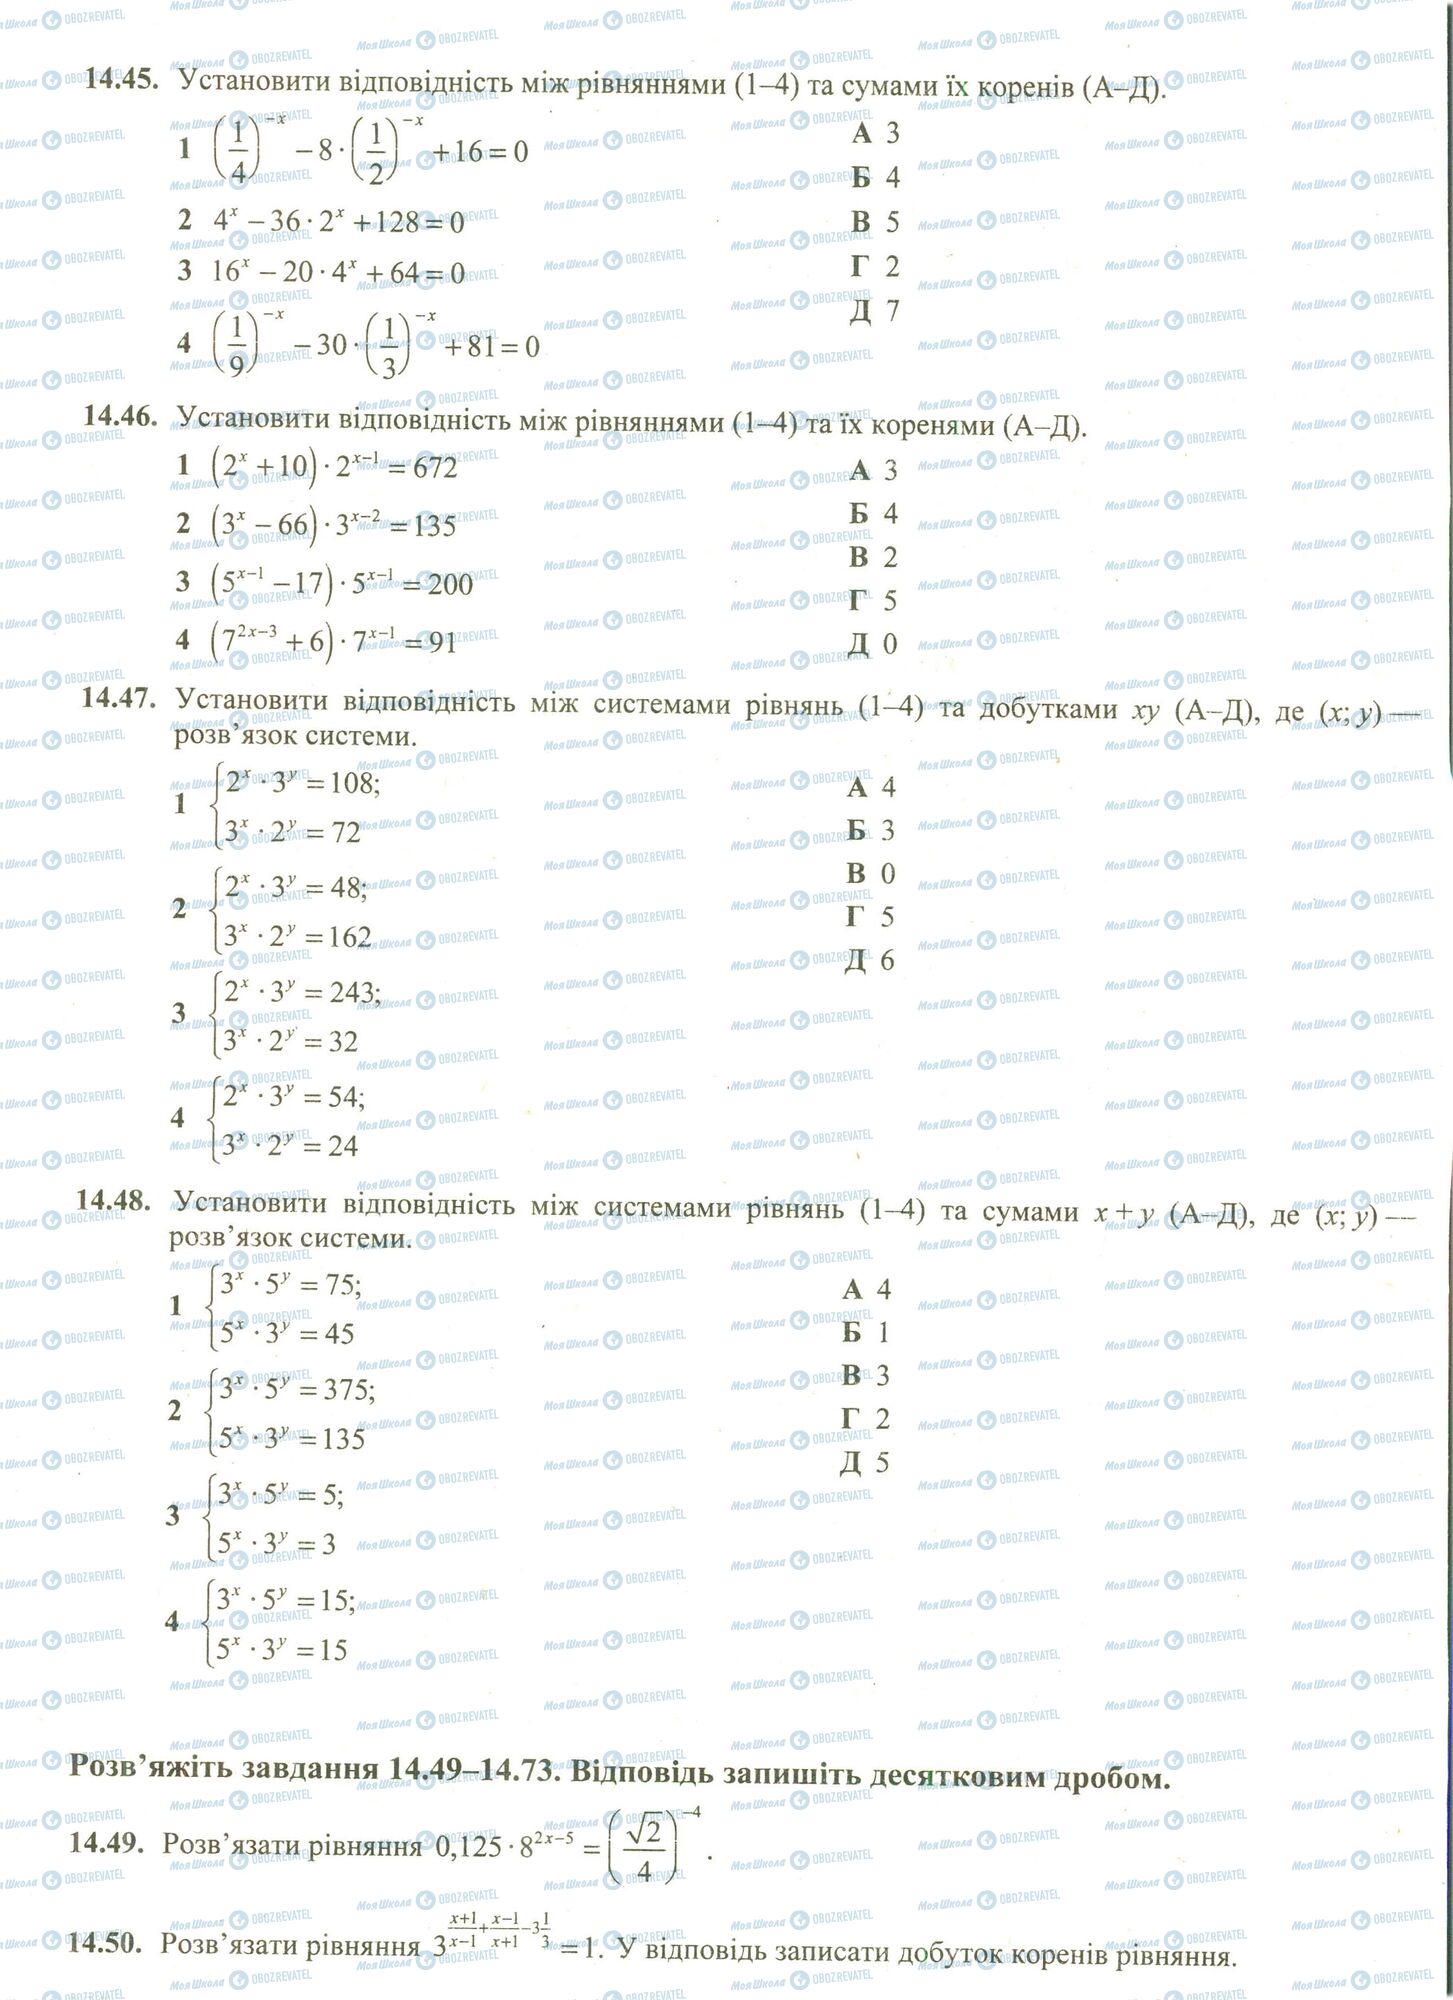 ЗНО Математика 11 класс страница 45-50